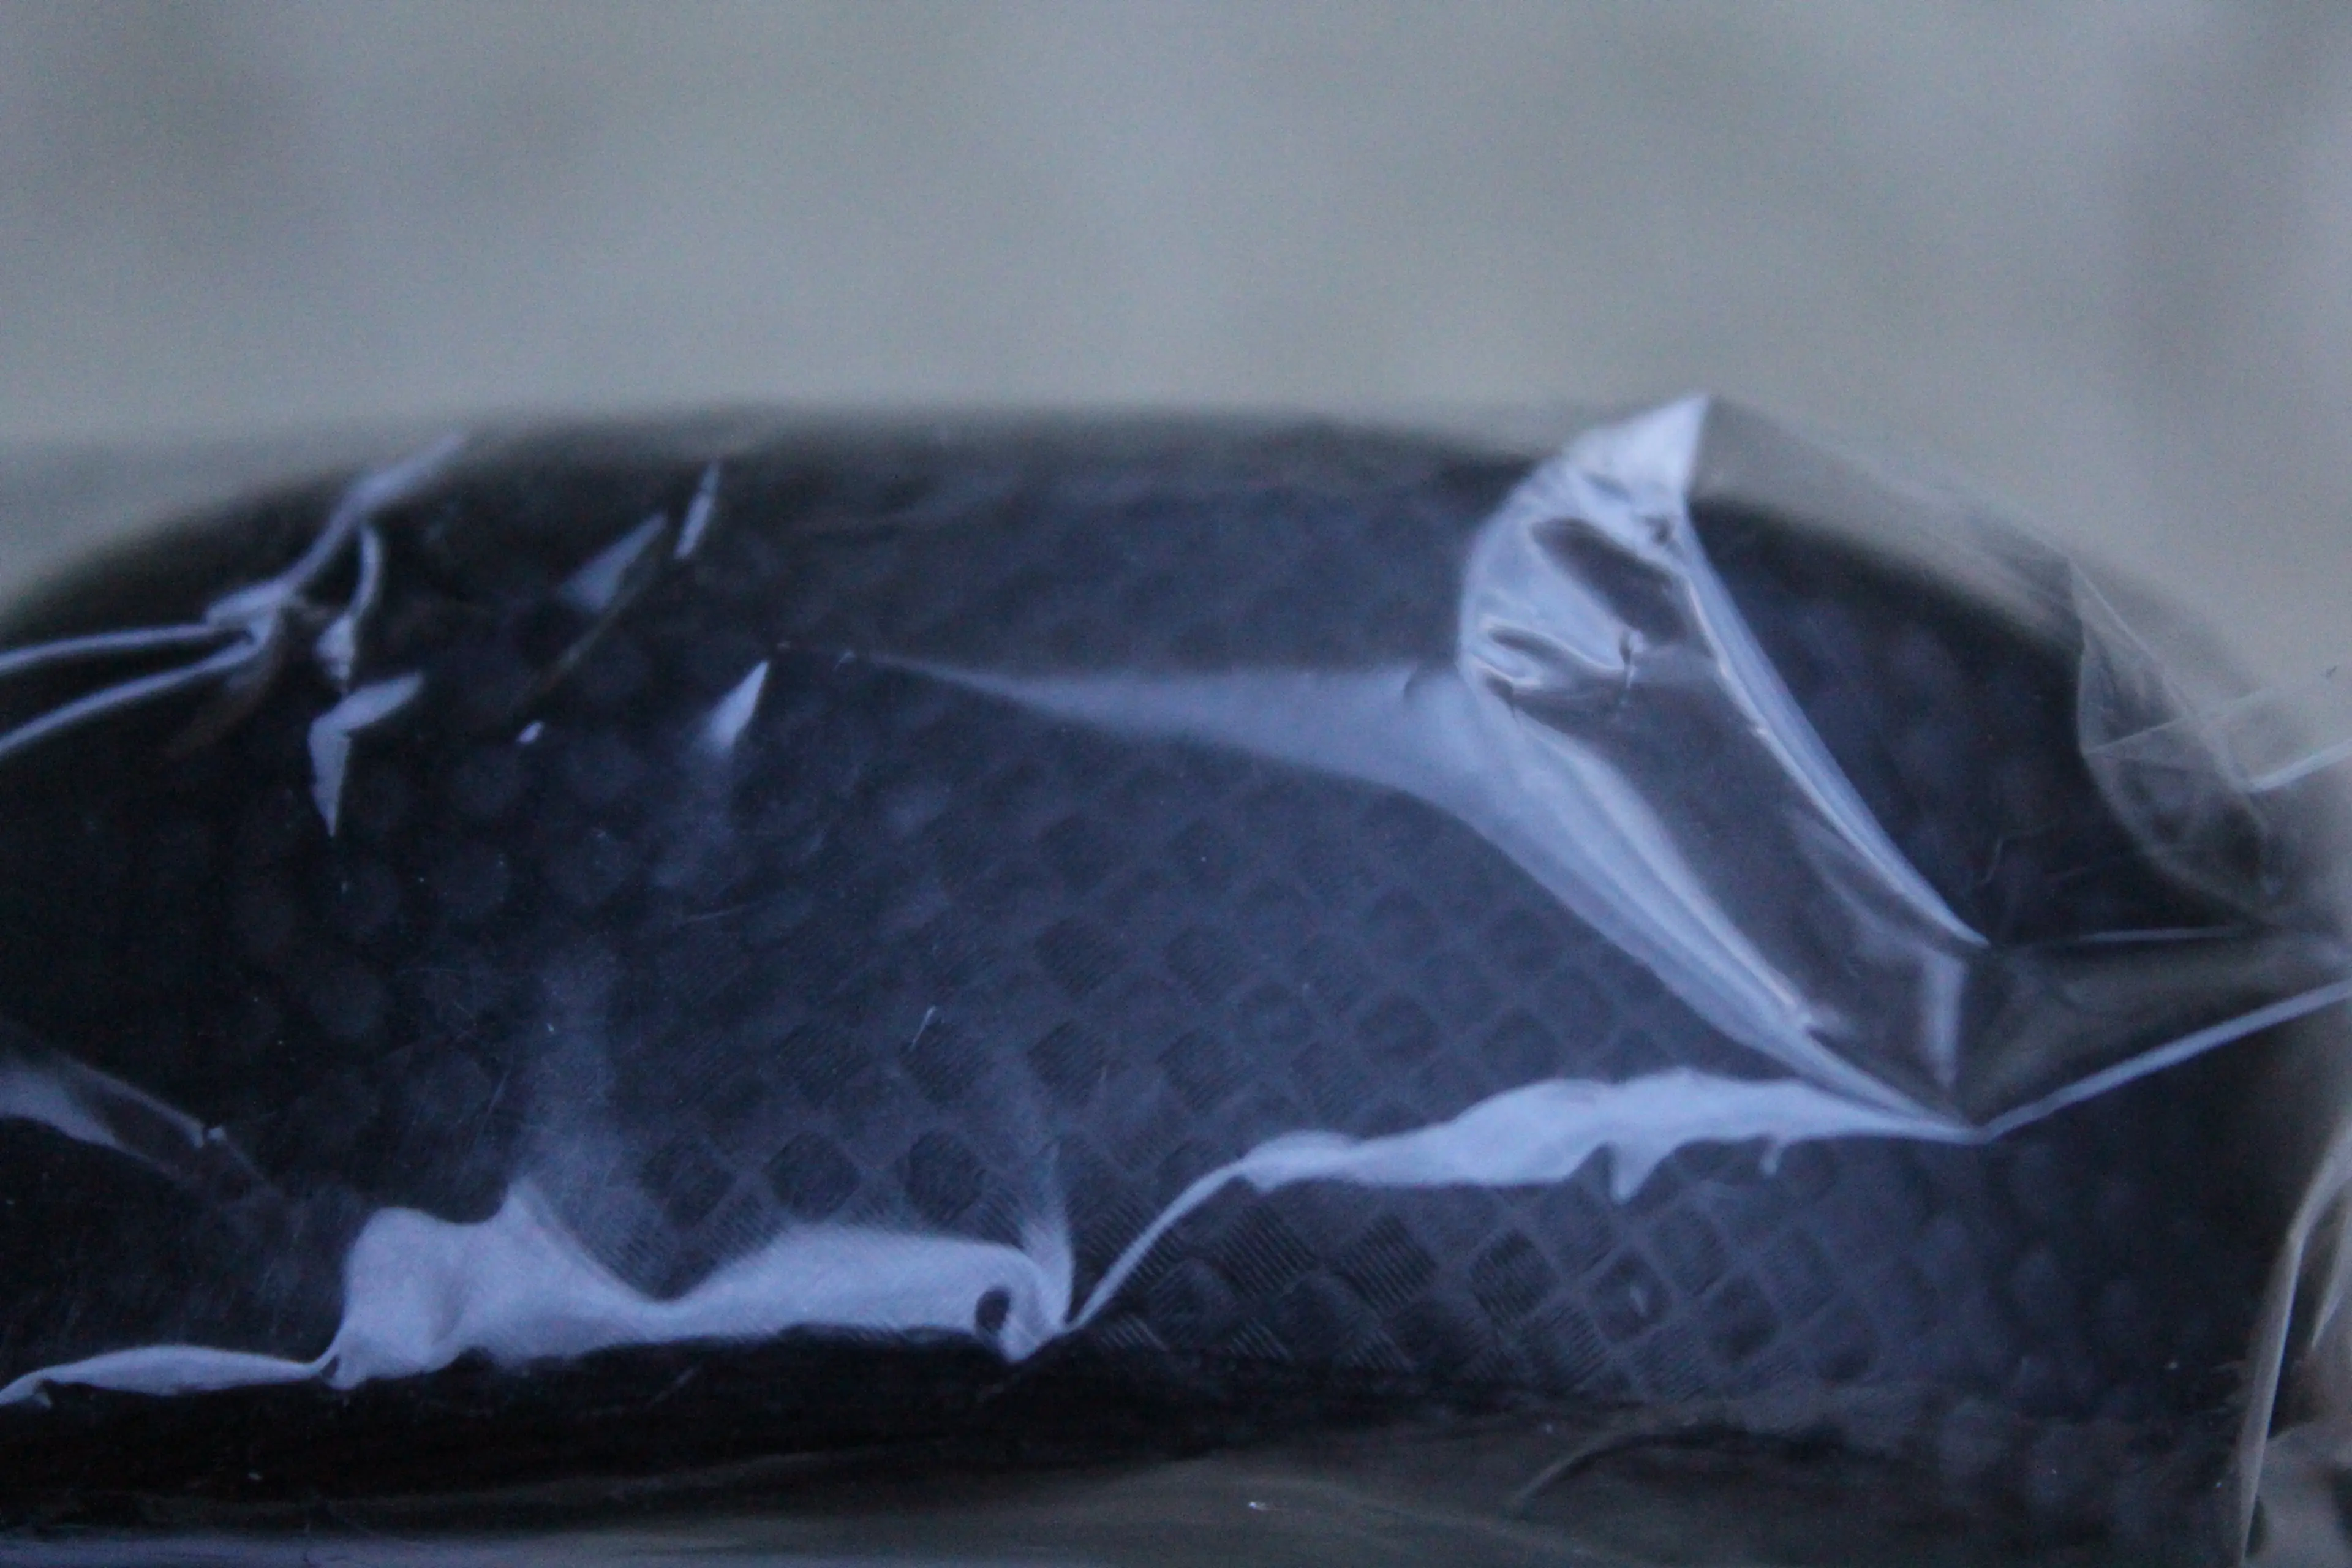 6. Kiwi Soft Grip ghidolina - Negru Carbon